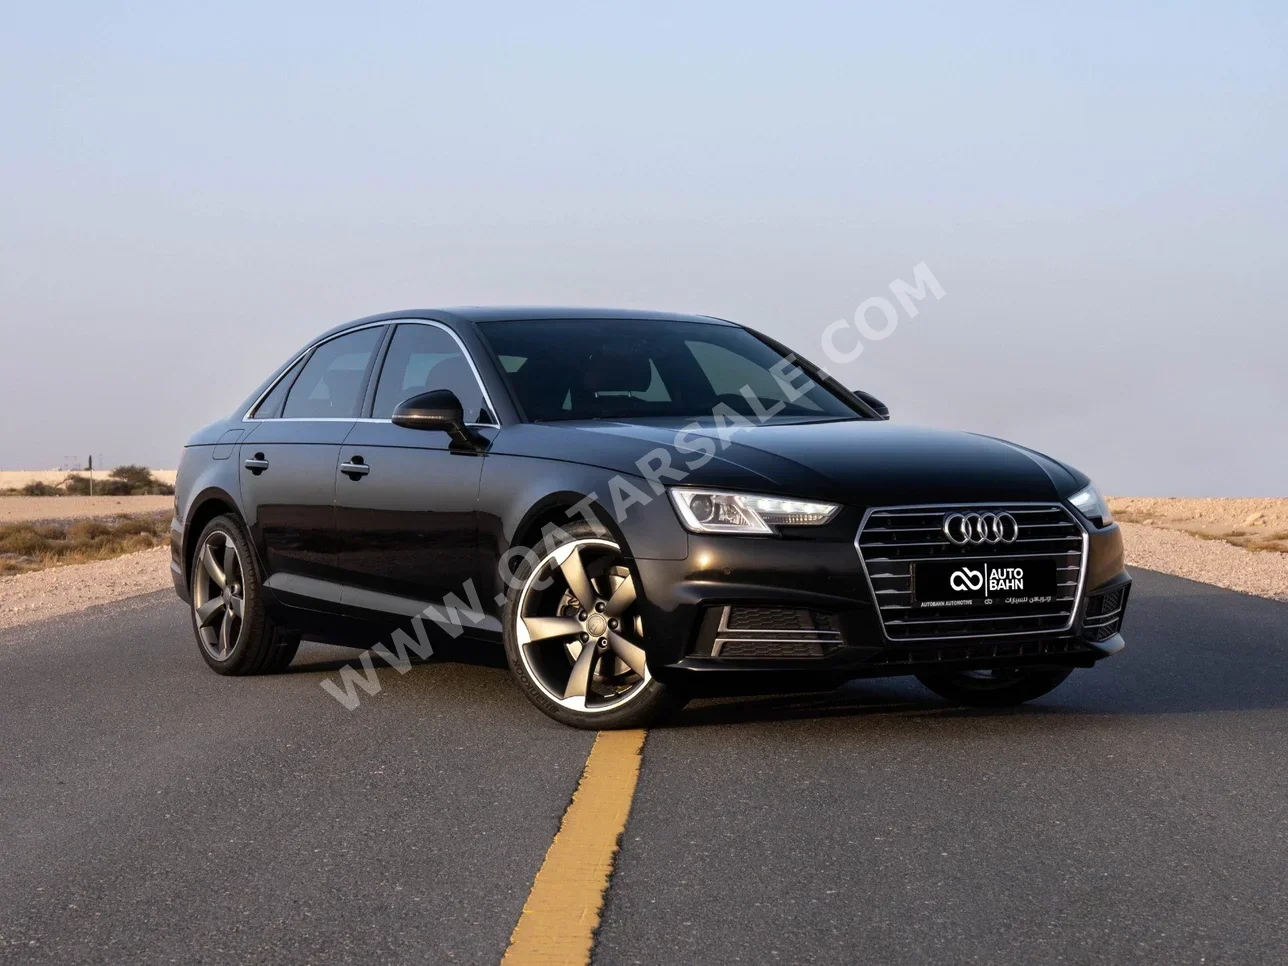 Audi  A4  2.0 T  2019  Automatic  92,000 Km  4 Cylinder  Front Wheel Drive (FWD)  Sedan  Black